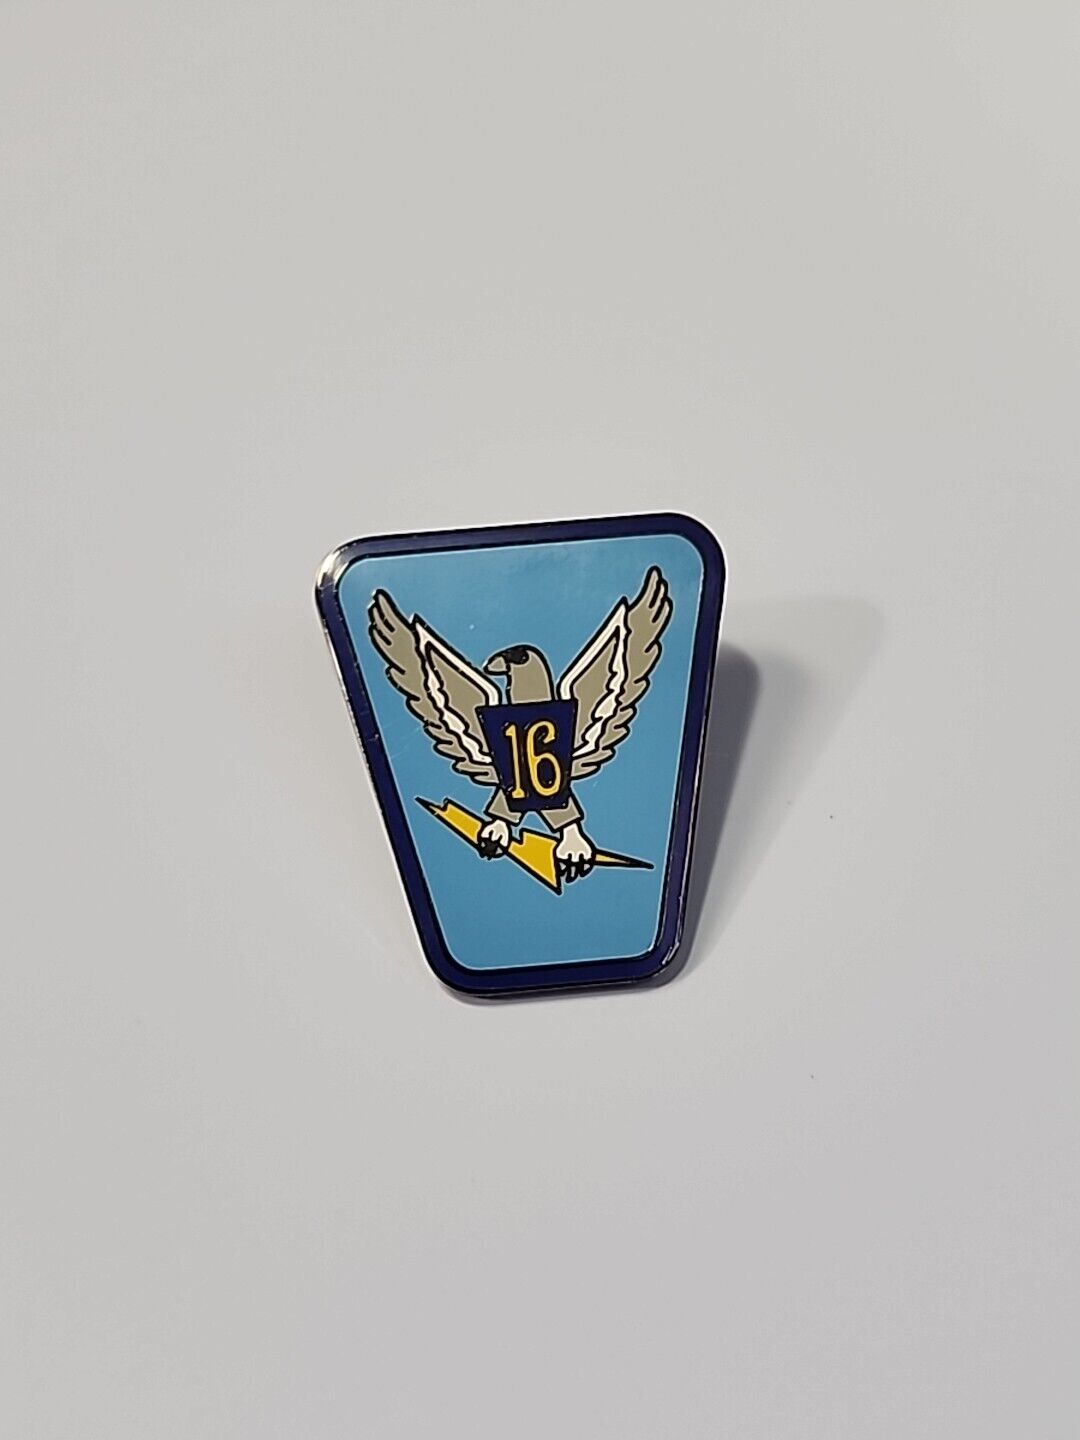 USAF Squadron 16 Lapel Pin Sixteenth Air Force